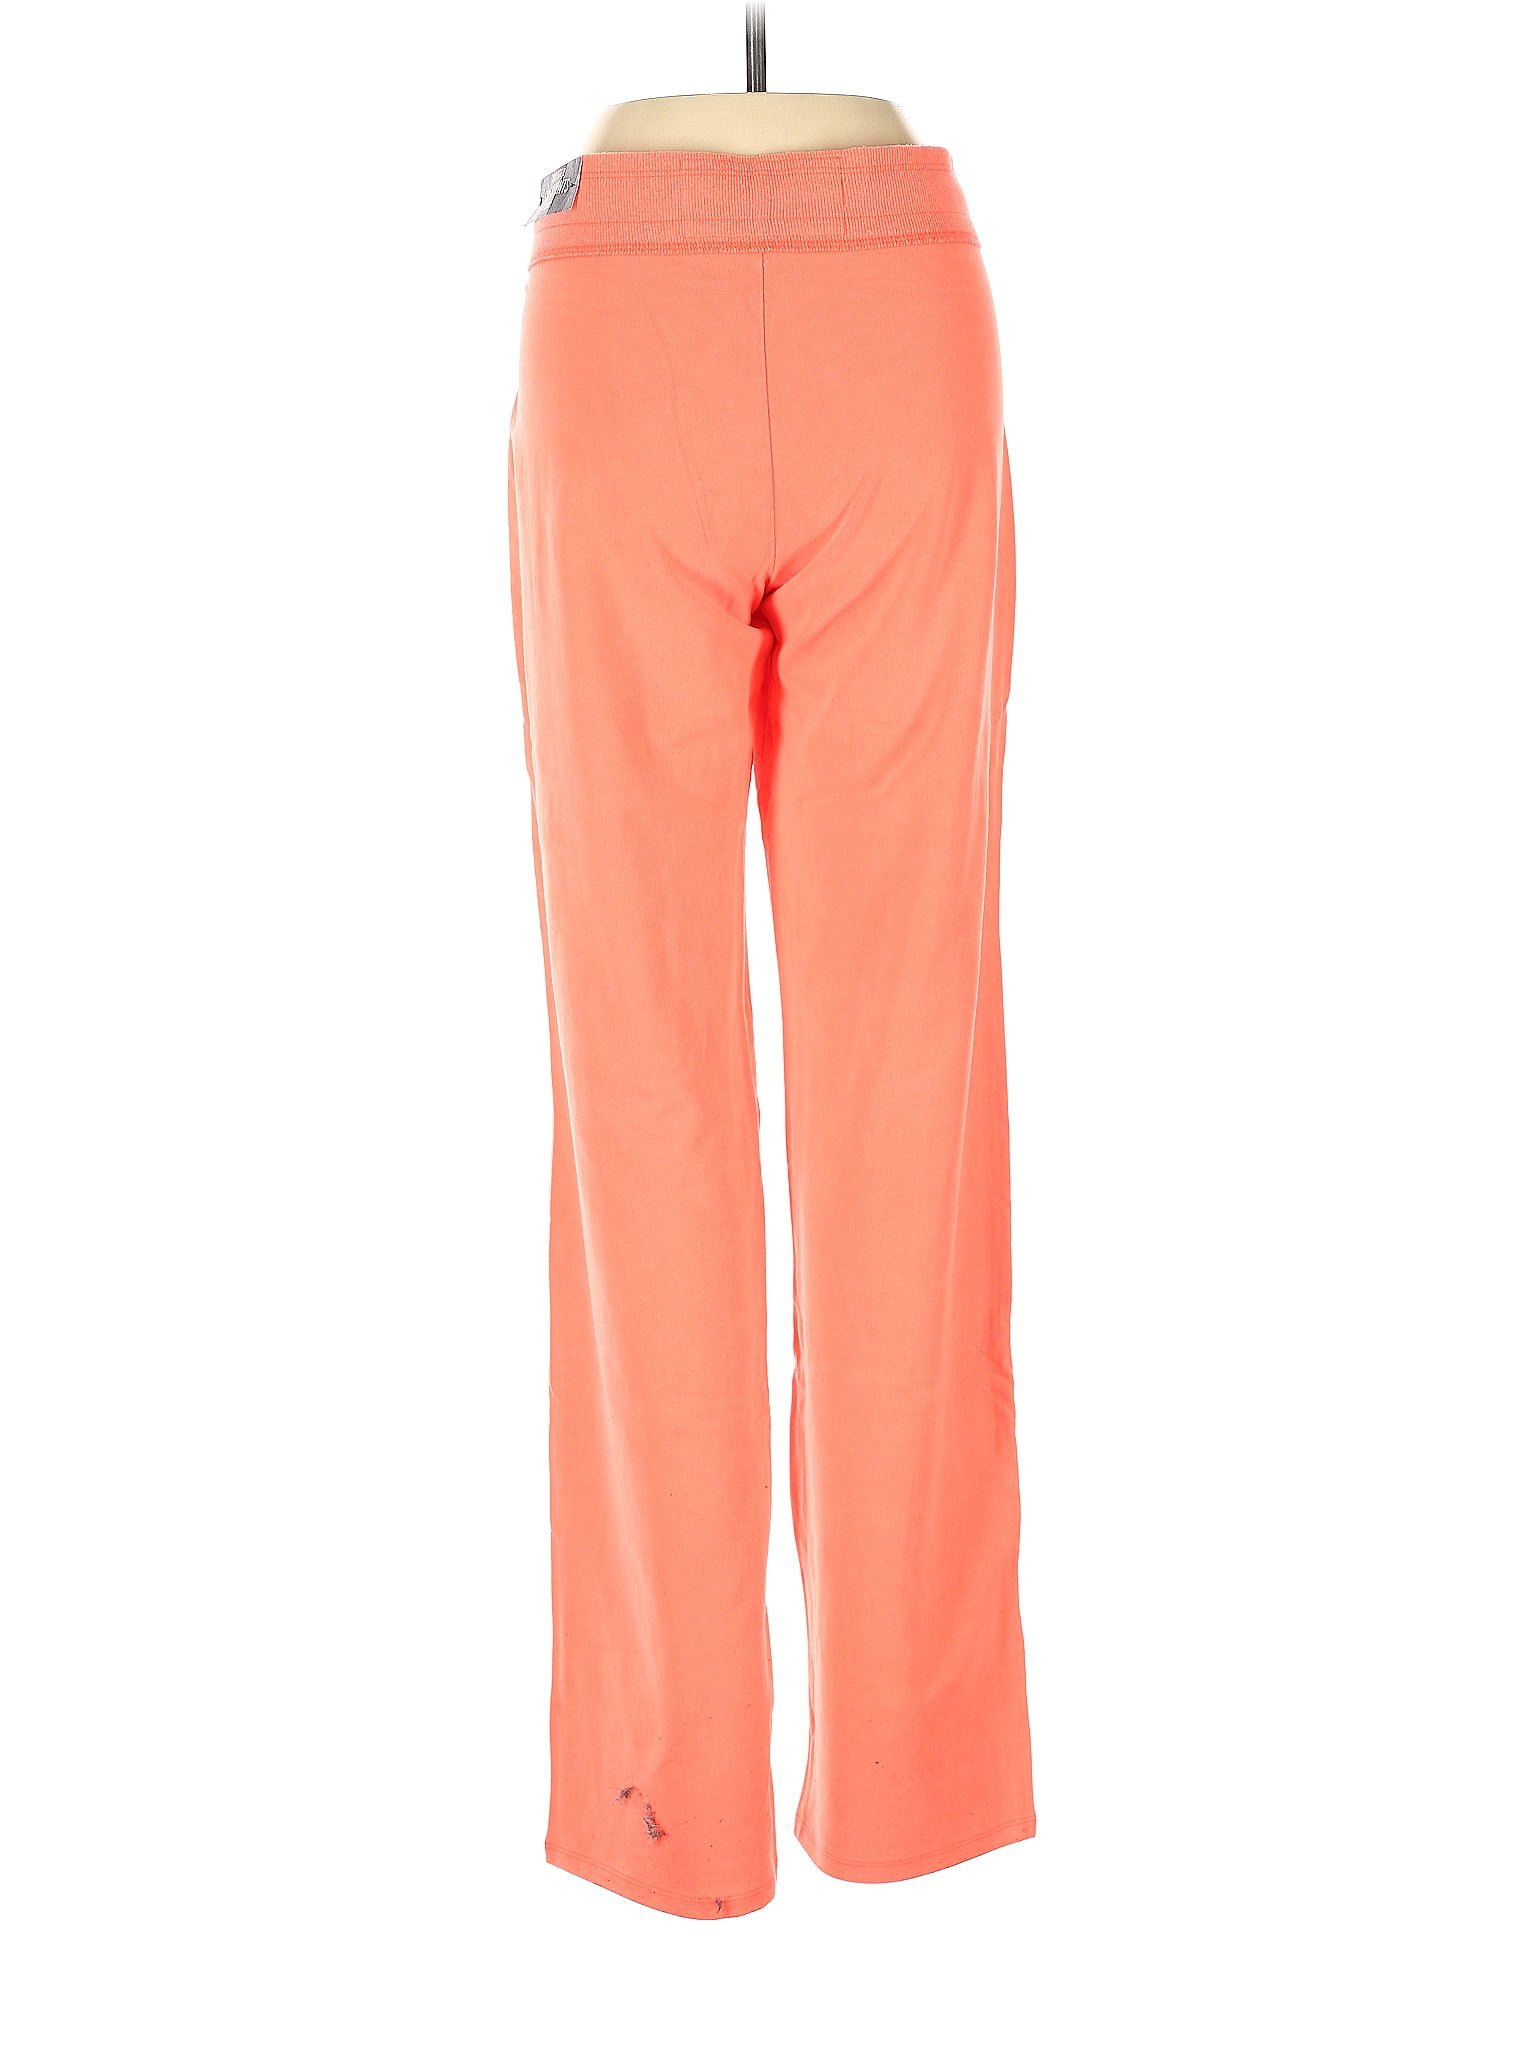 Hollister Orange Sweatpants Size S - 47% off